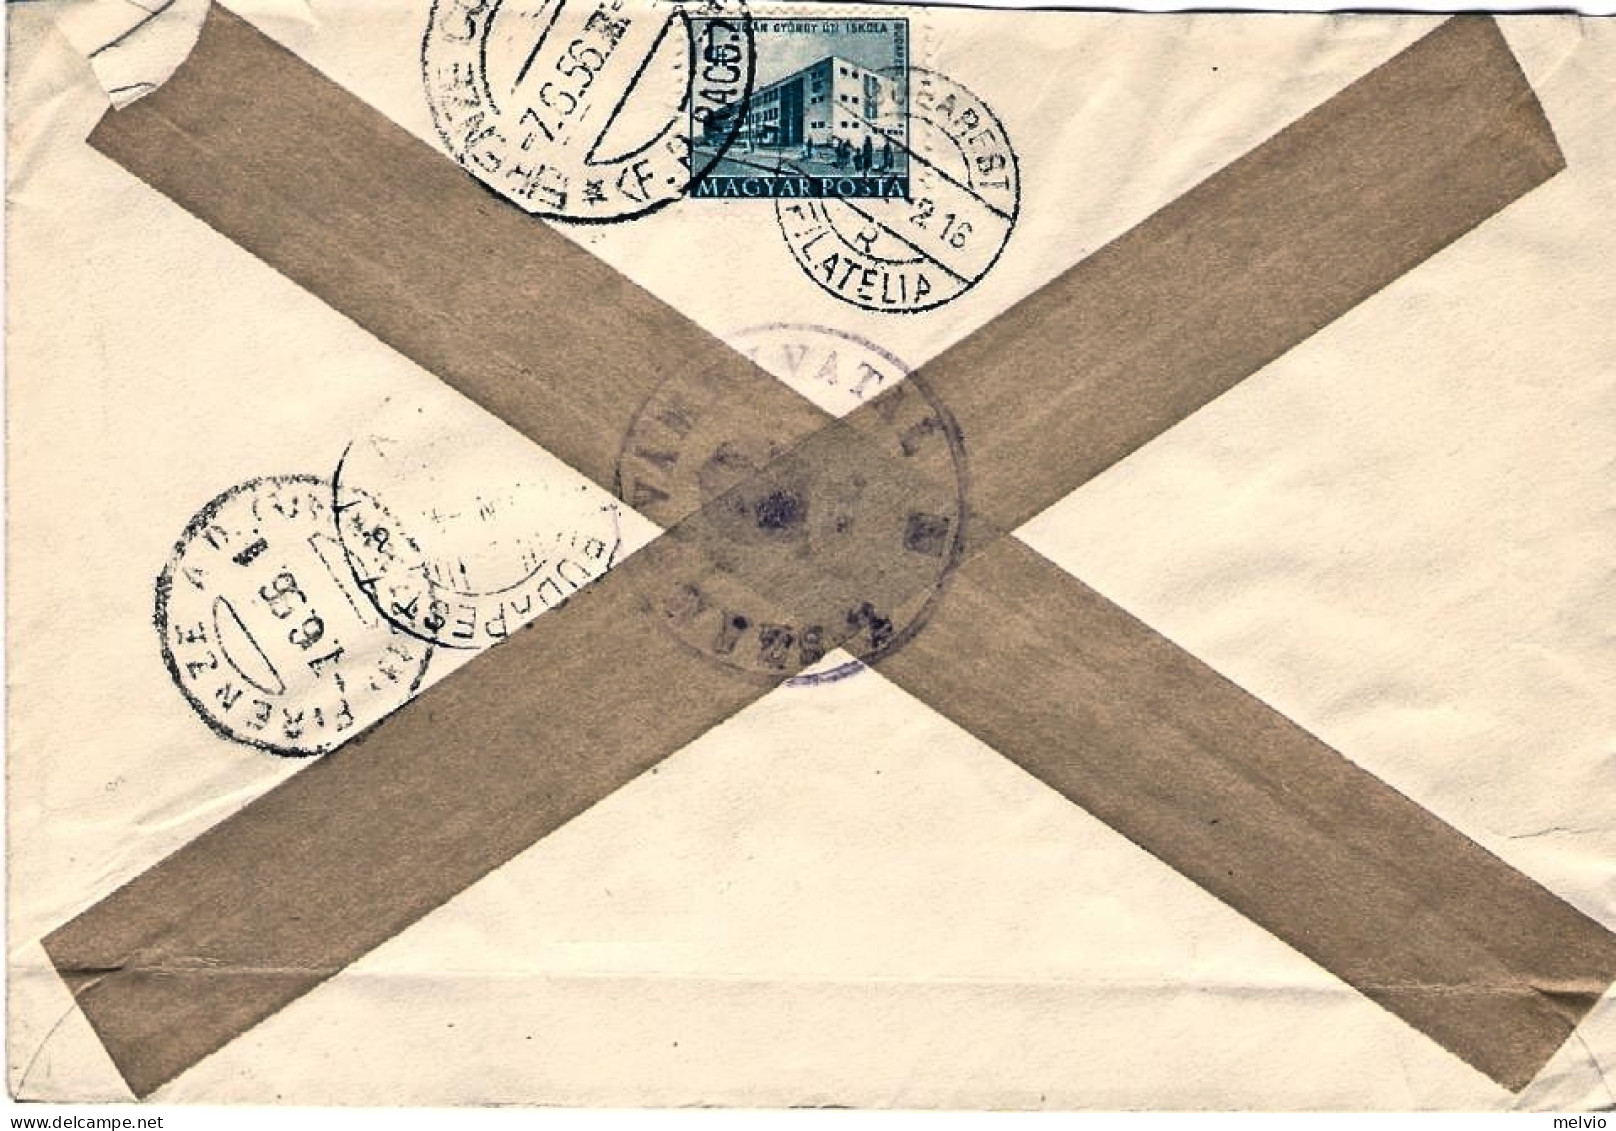 1956-Ungheria Hungary Magyar Lettera Raccomandata Illustrata Diretta In Italia A - Postmark Collection